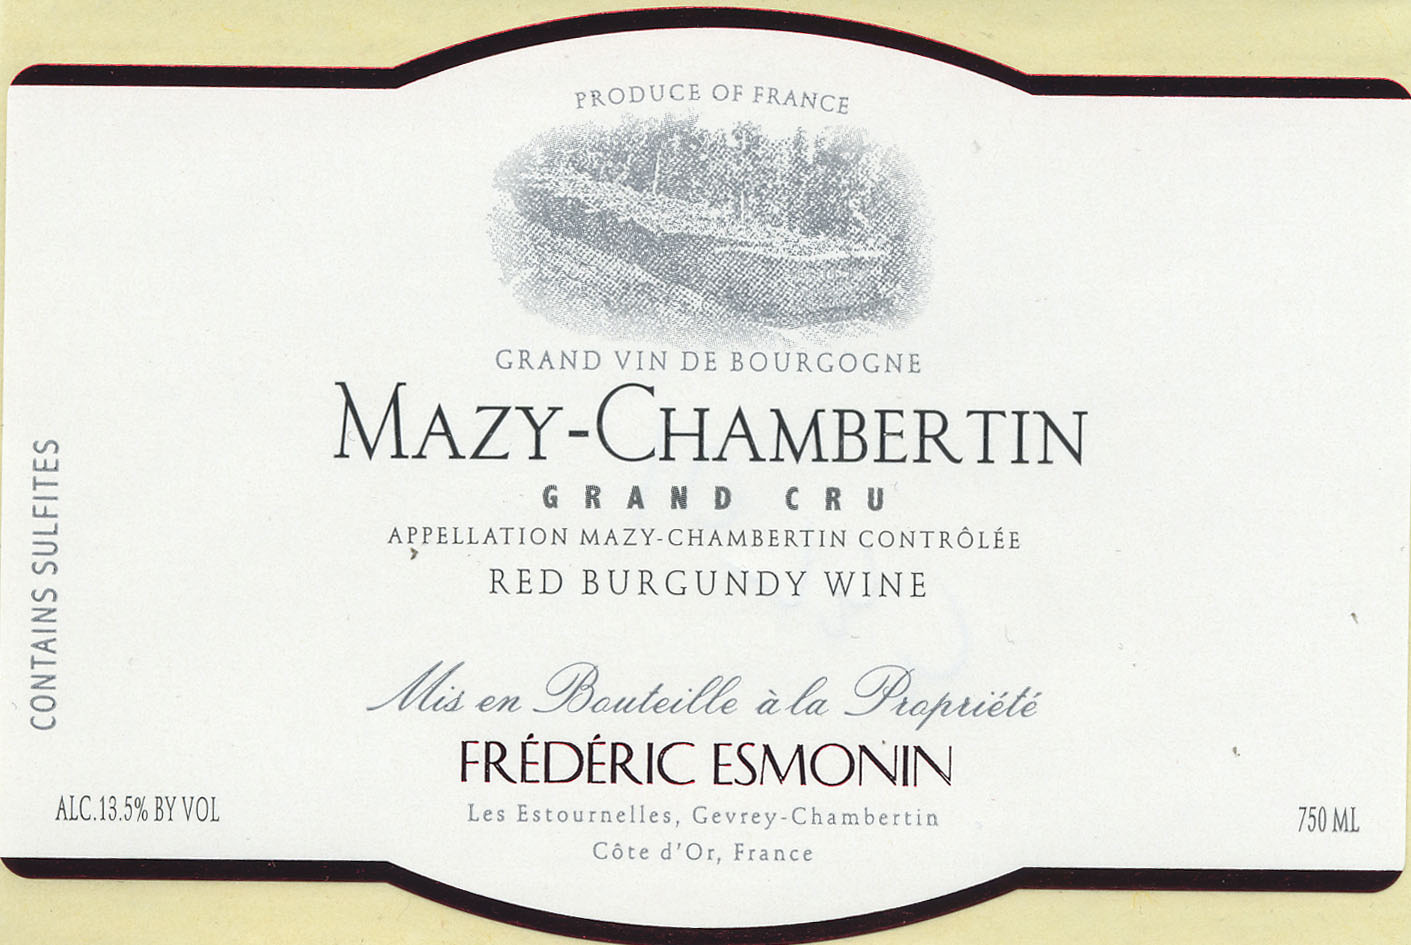 Frederic Esmonin - Mazy Chambertin label